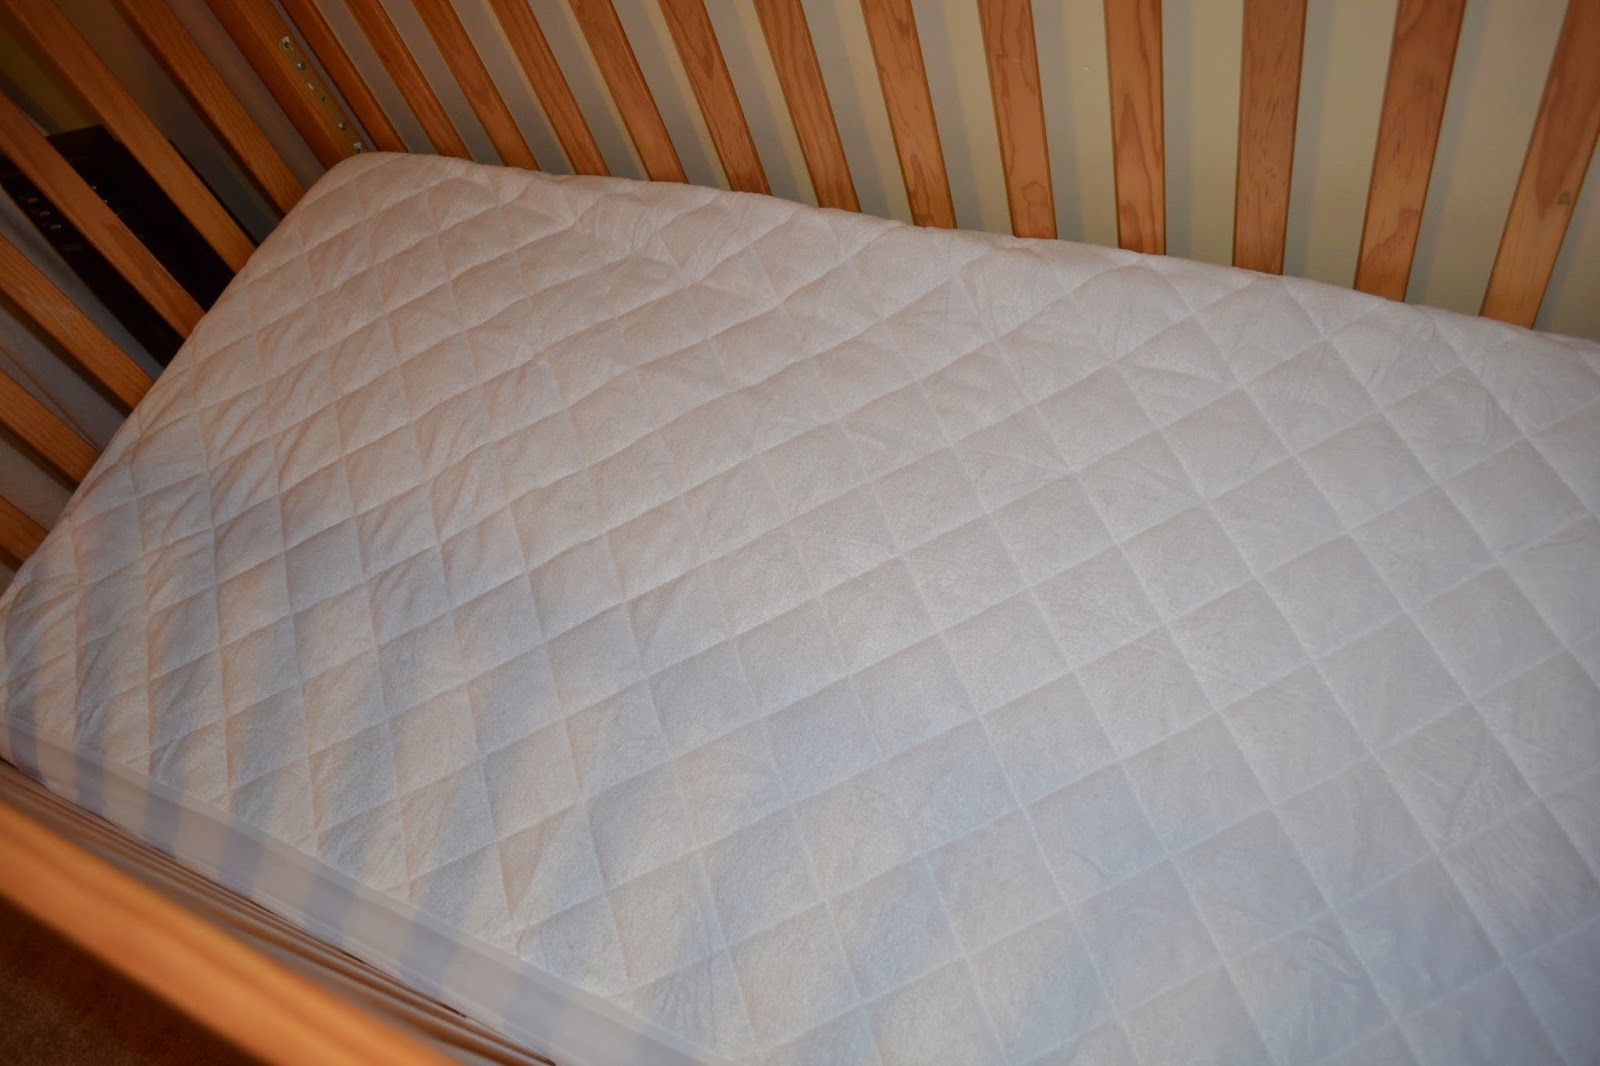 crib mattress protector safety